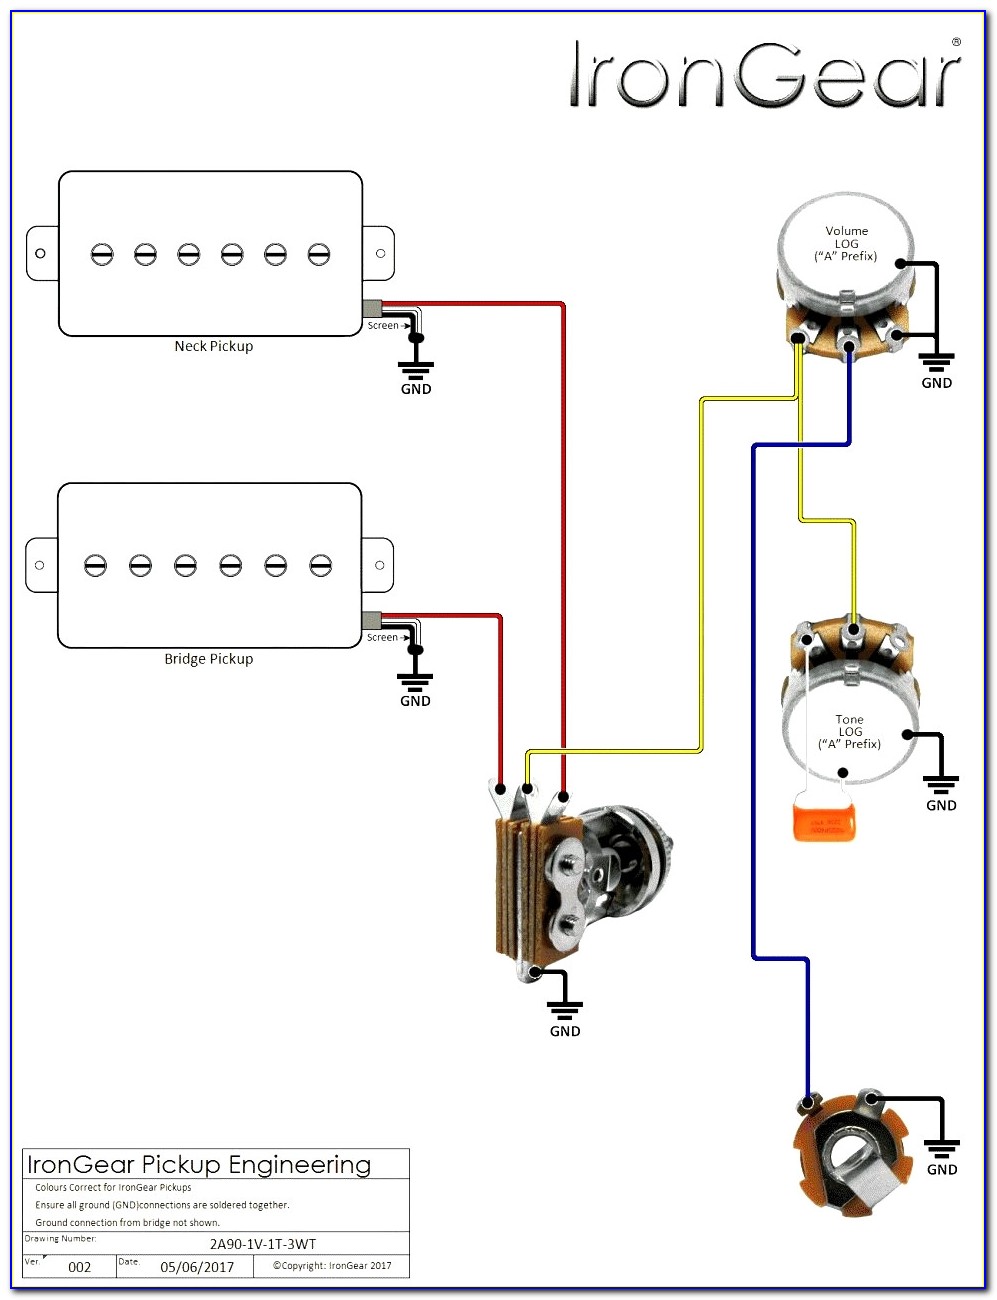 Jl Audio Subwoofer Wiring Diagram